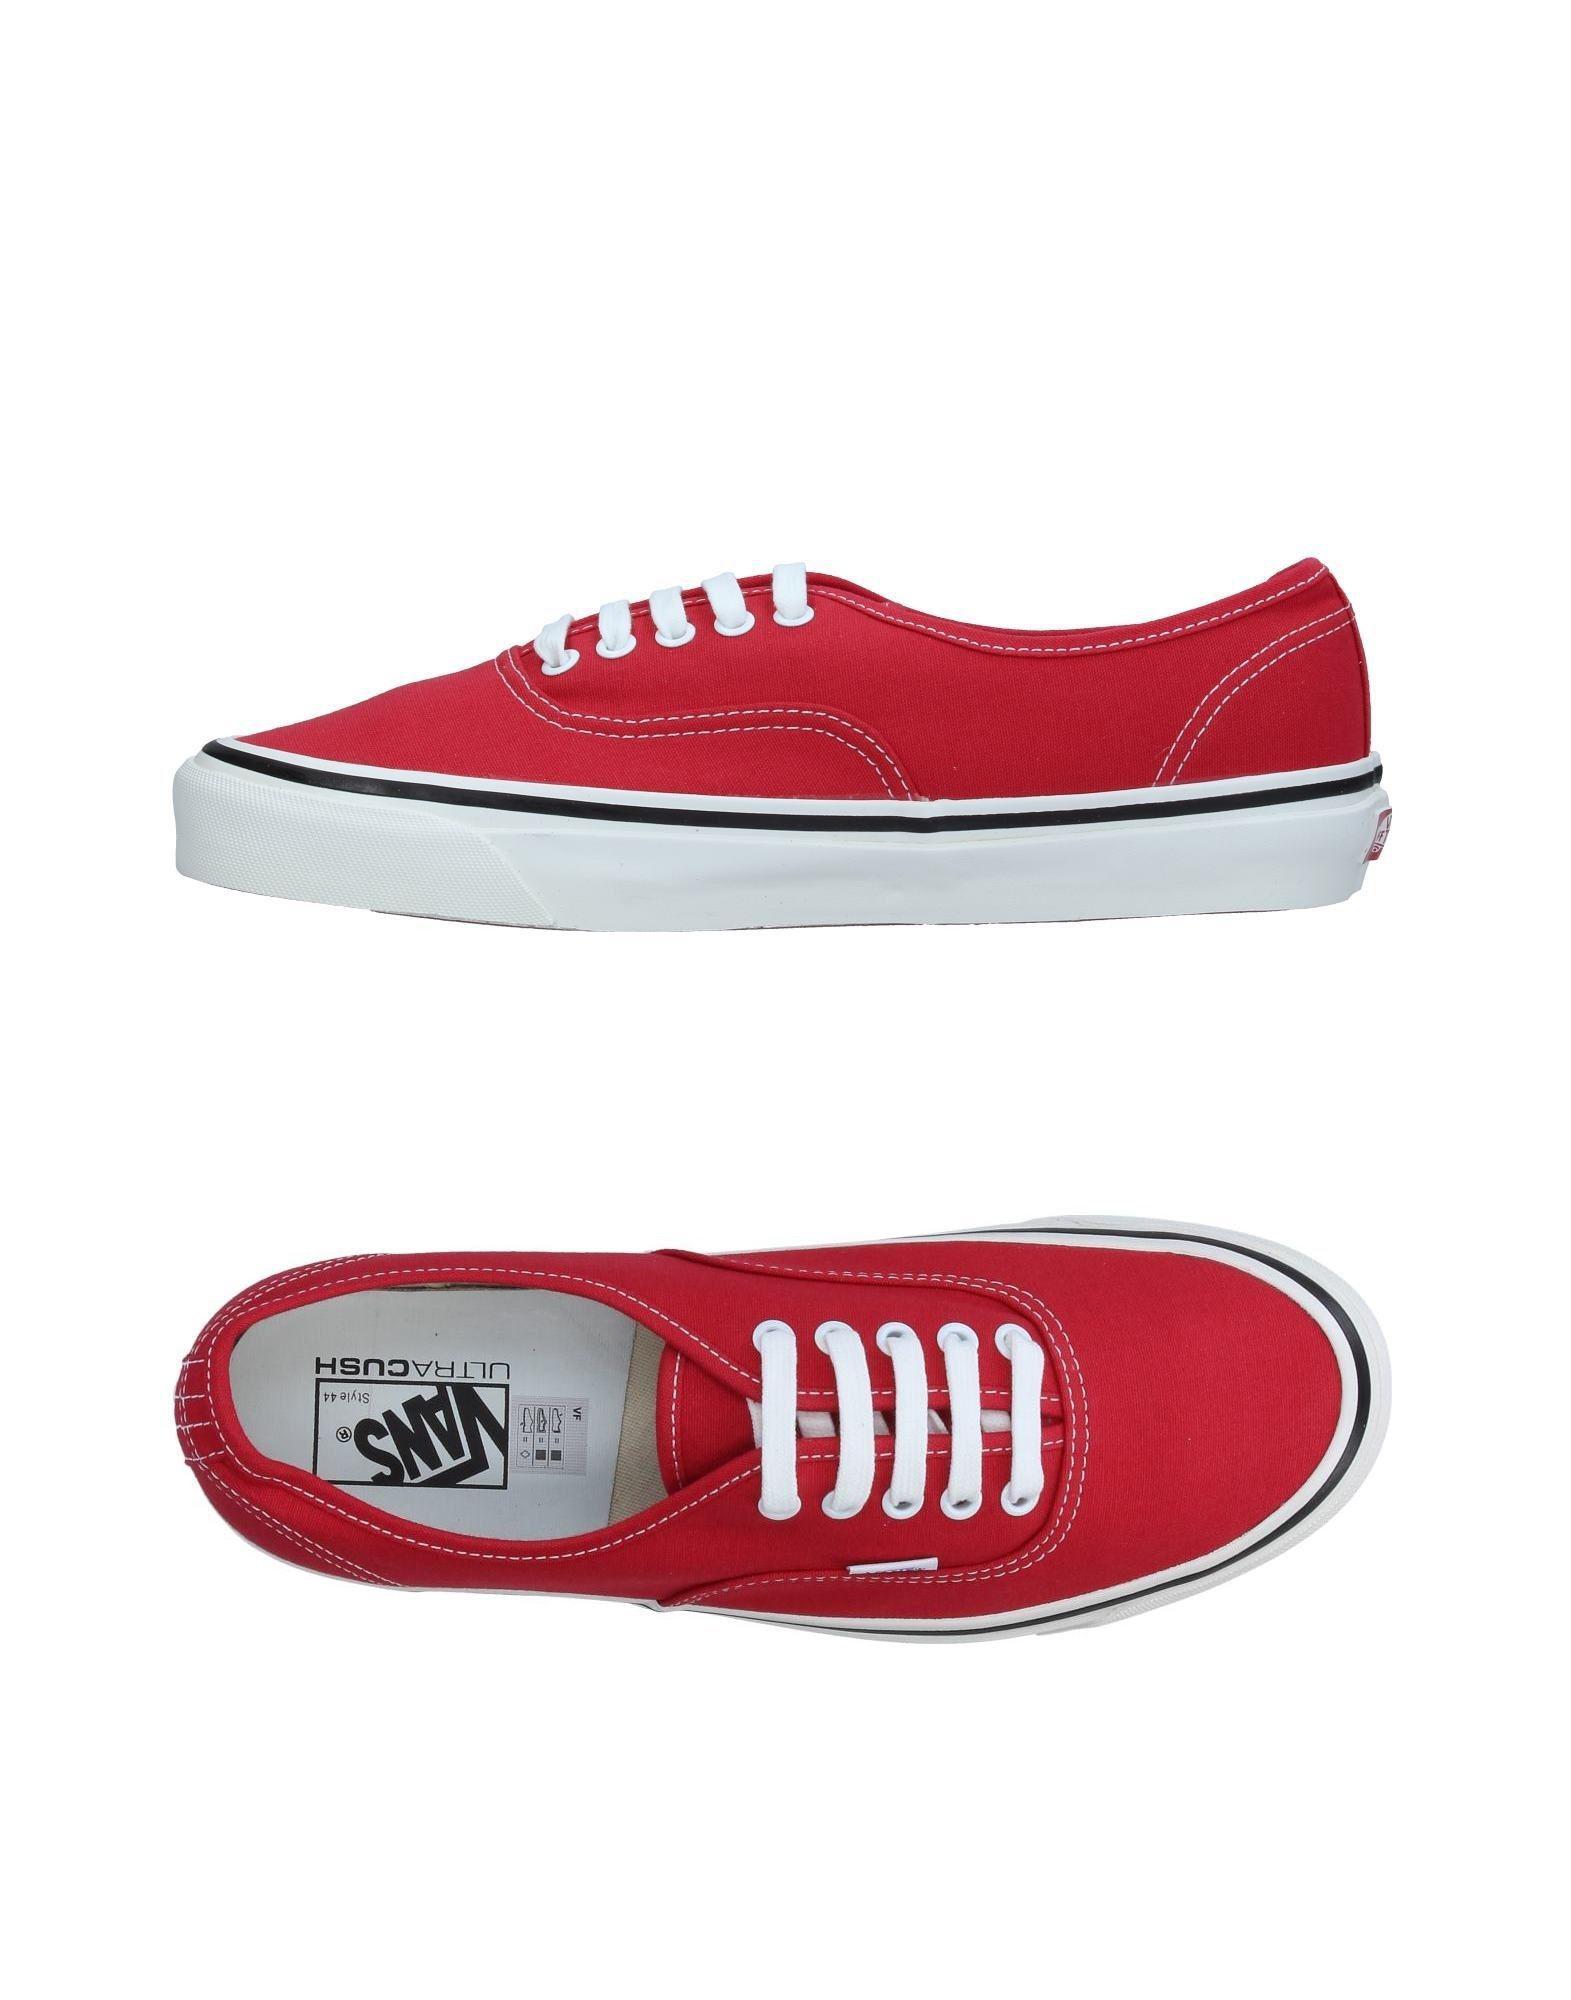 Lyst - Vans Low-tops & Sneakers in Red for Men - Save 67.56756756756756%